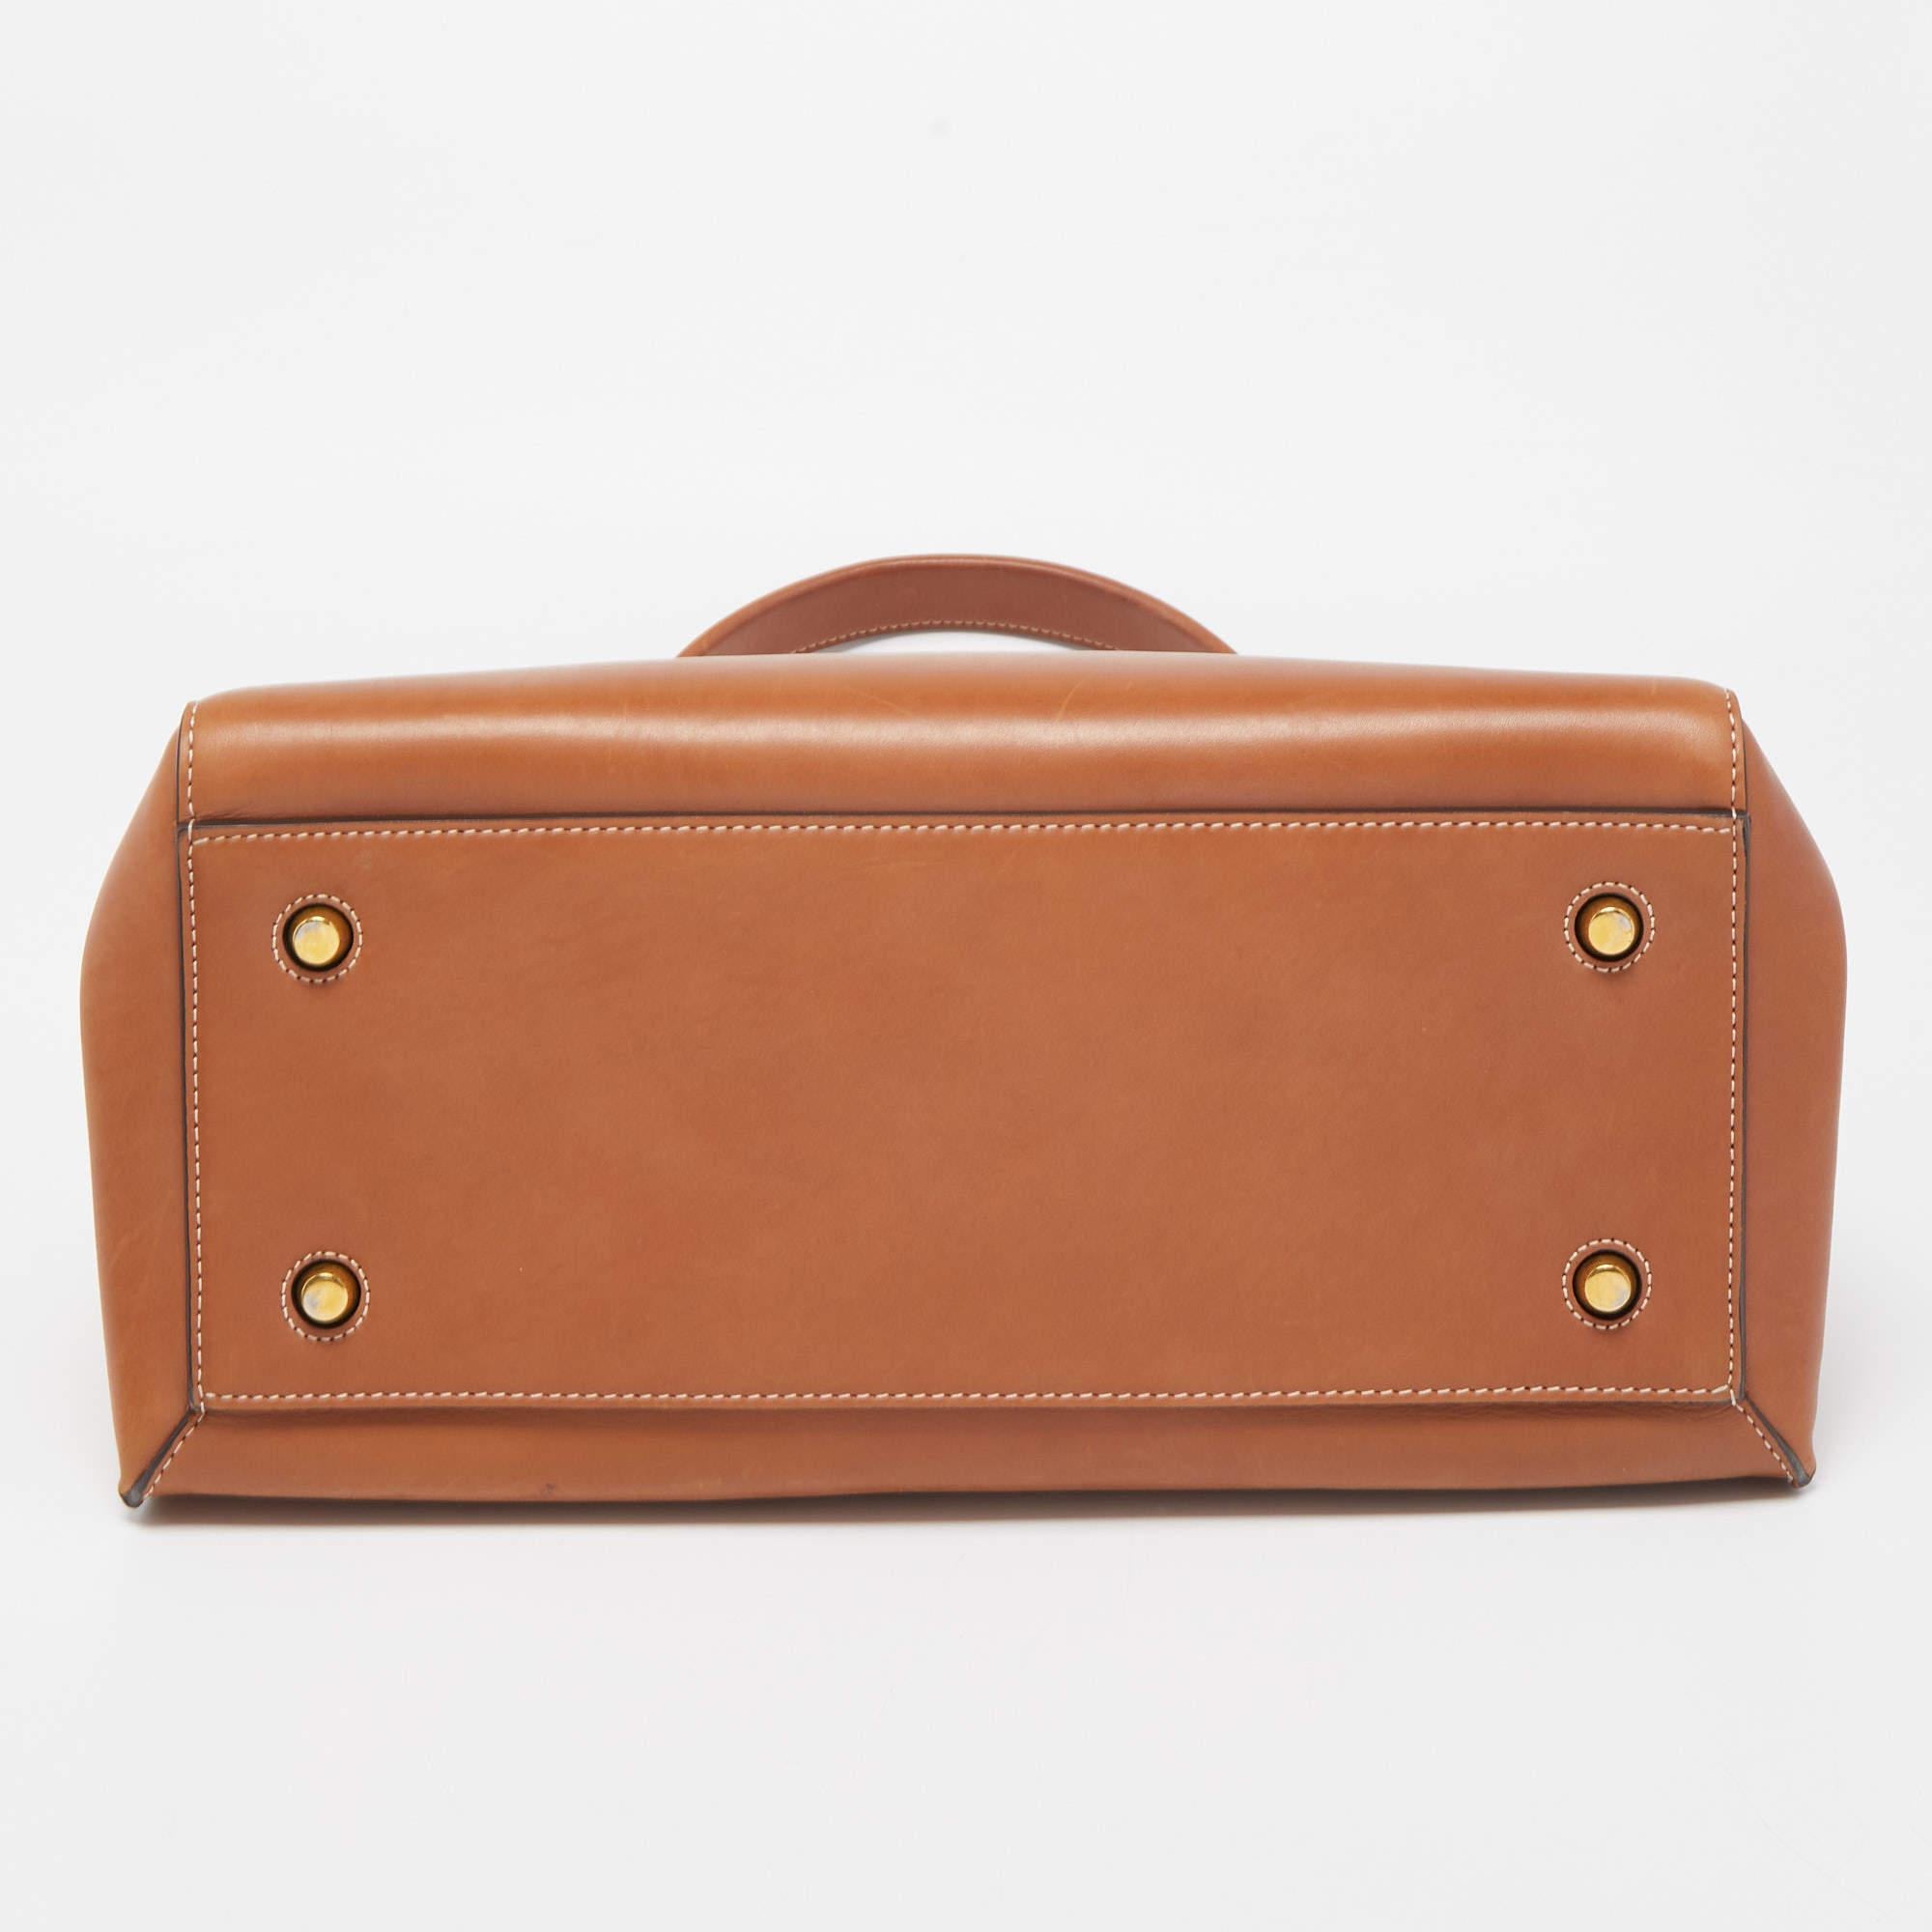 Celine Tan Leather Medium Edge Top Handle Bag 1